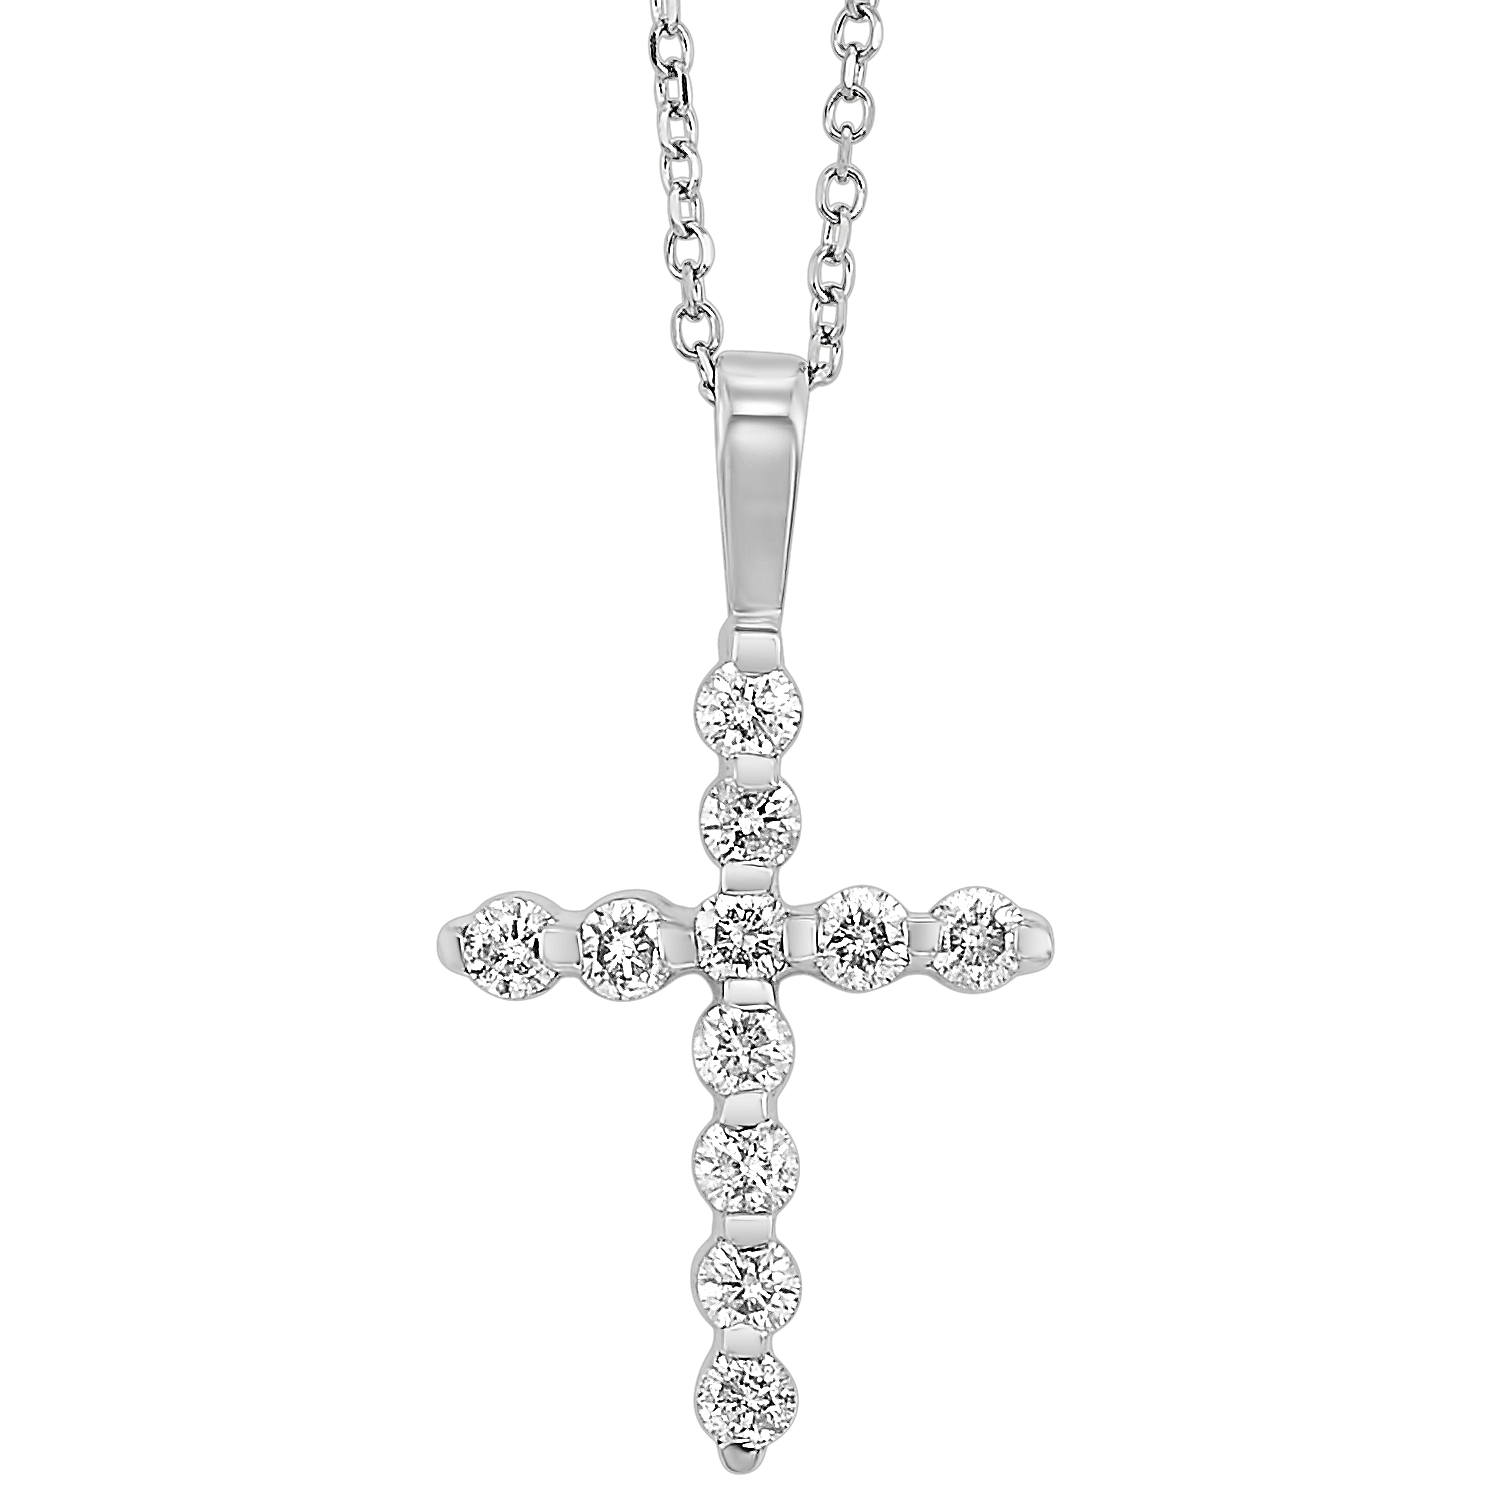 BW James Jewelers Pendant 16 Page Christmas Catalog Offer 14KTW Diamond Cross Fashion Pendant 3/4Ct